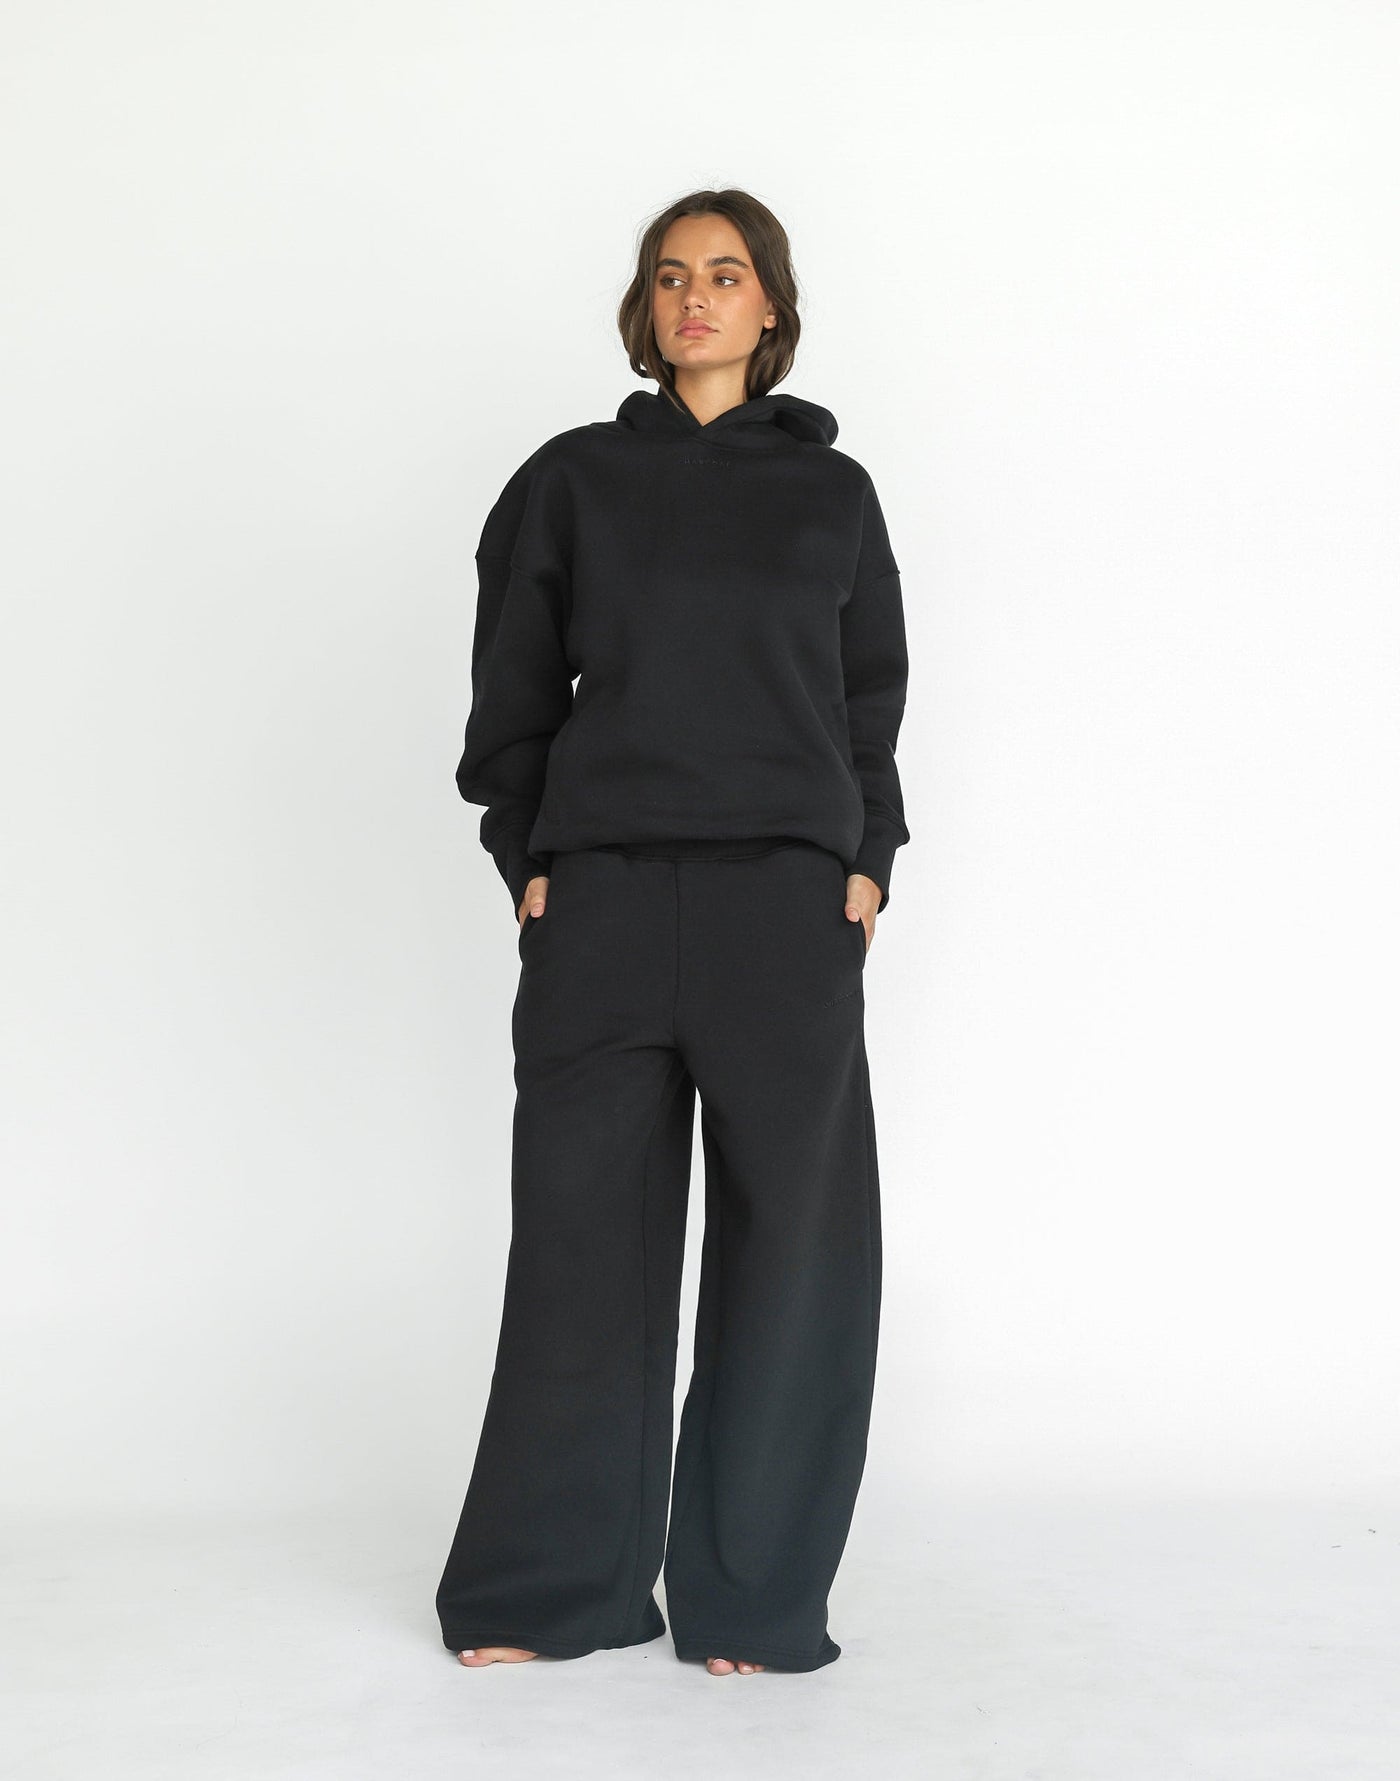 Noah Hoodie (Black) | CHARCOAL Exclusive - Oversized Dual Pocket Fleece Lined Hoodie - Women's Top - Charcoal Clothing